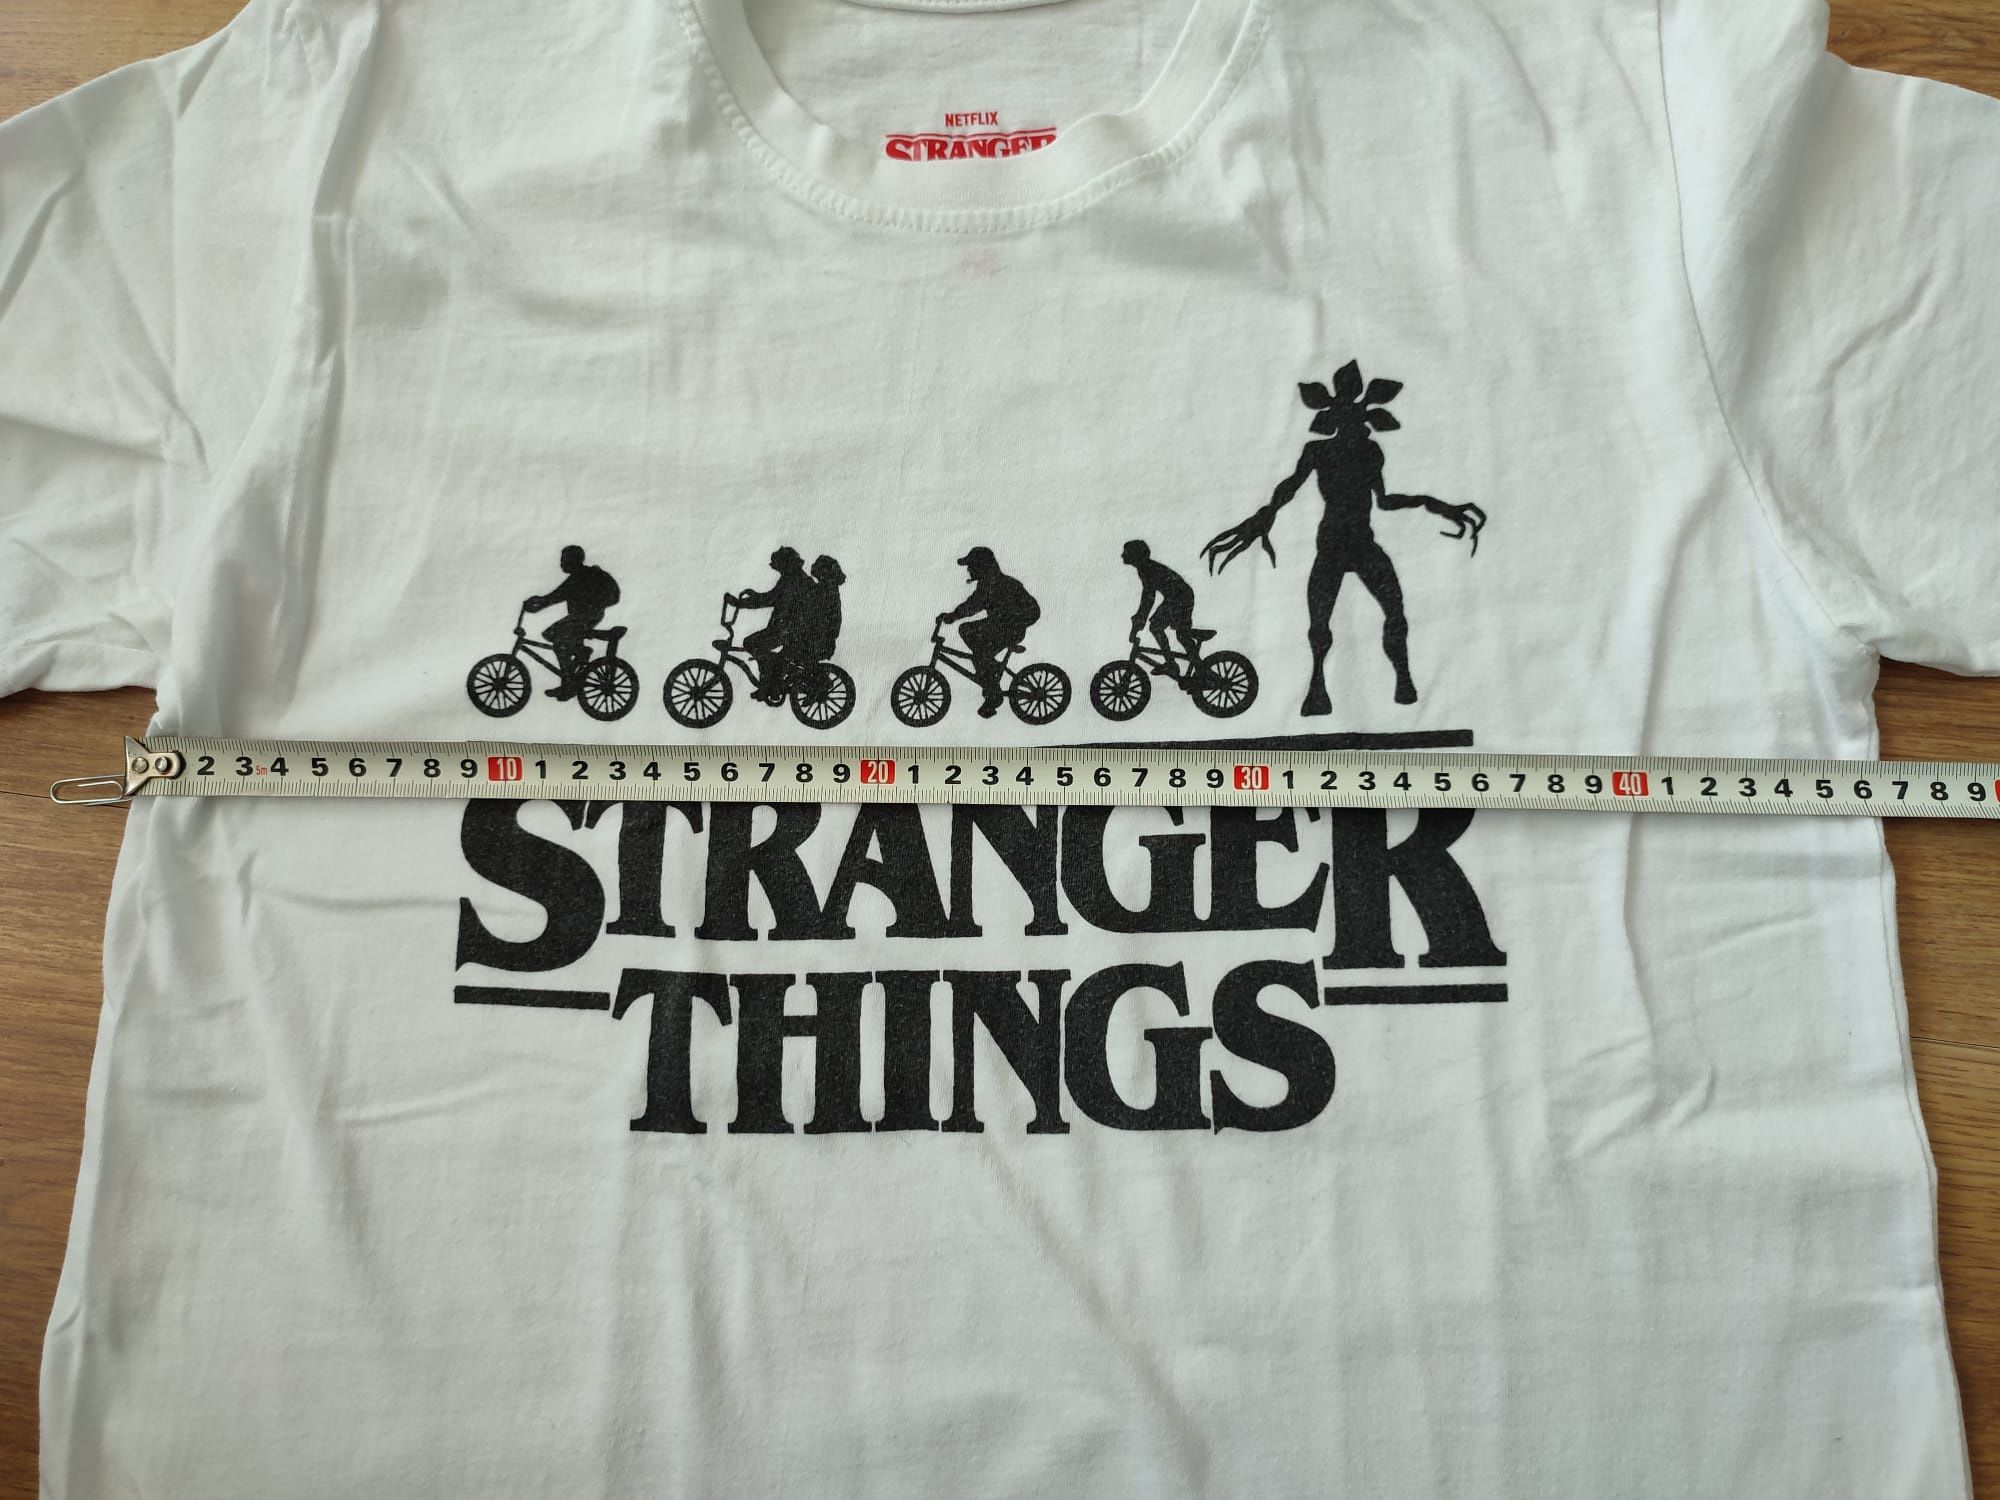 Netflix Stranger things t-shirt rozm. 170